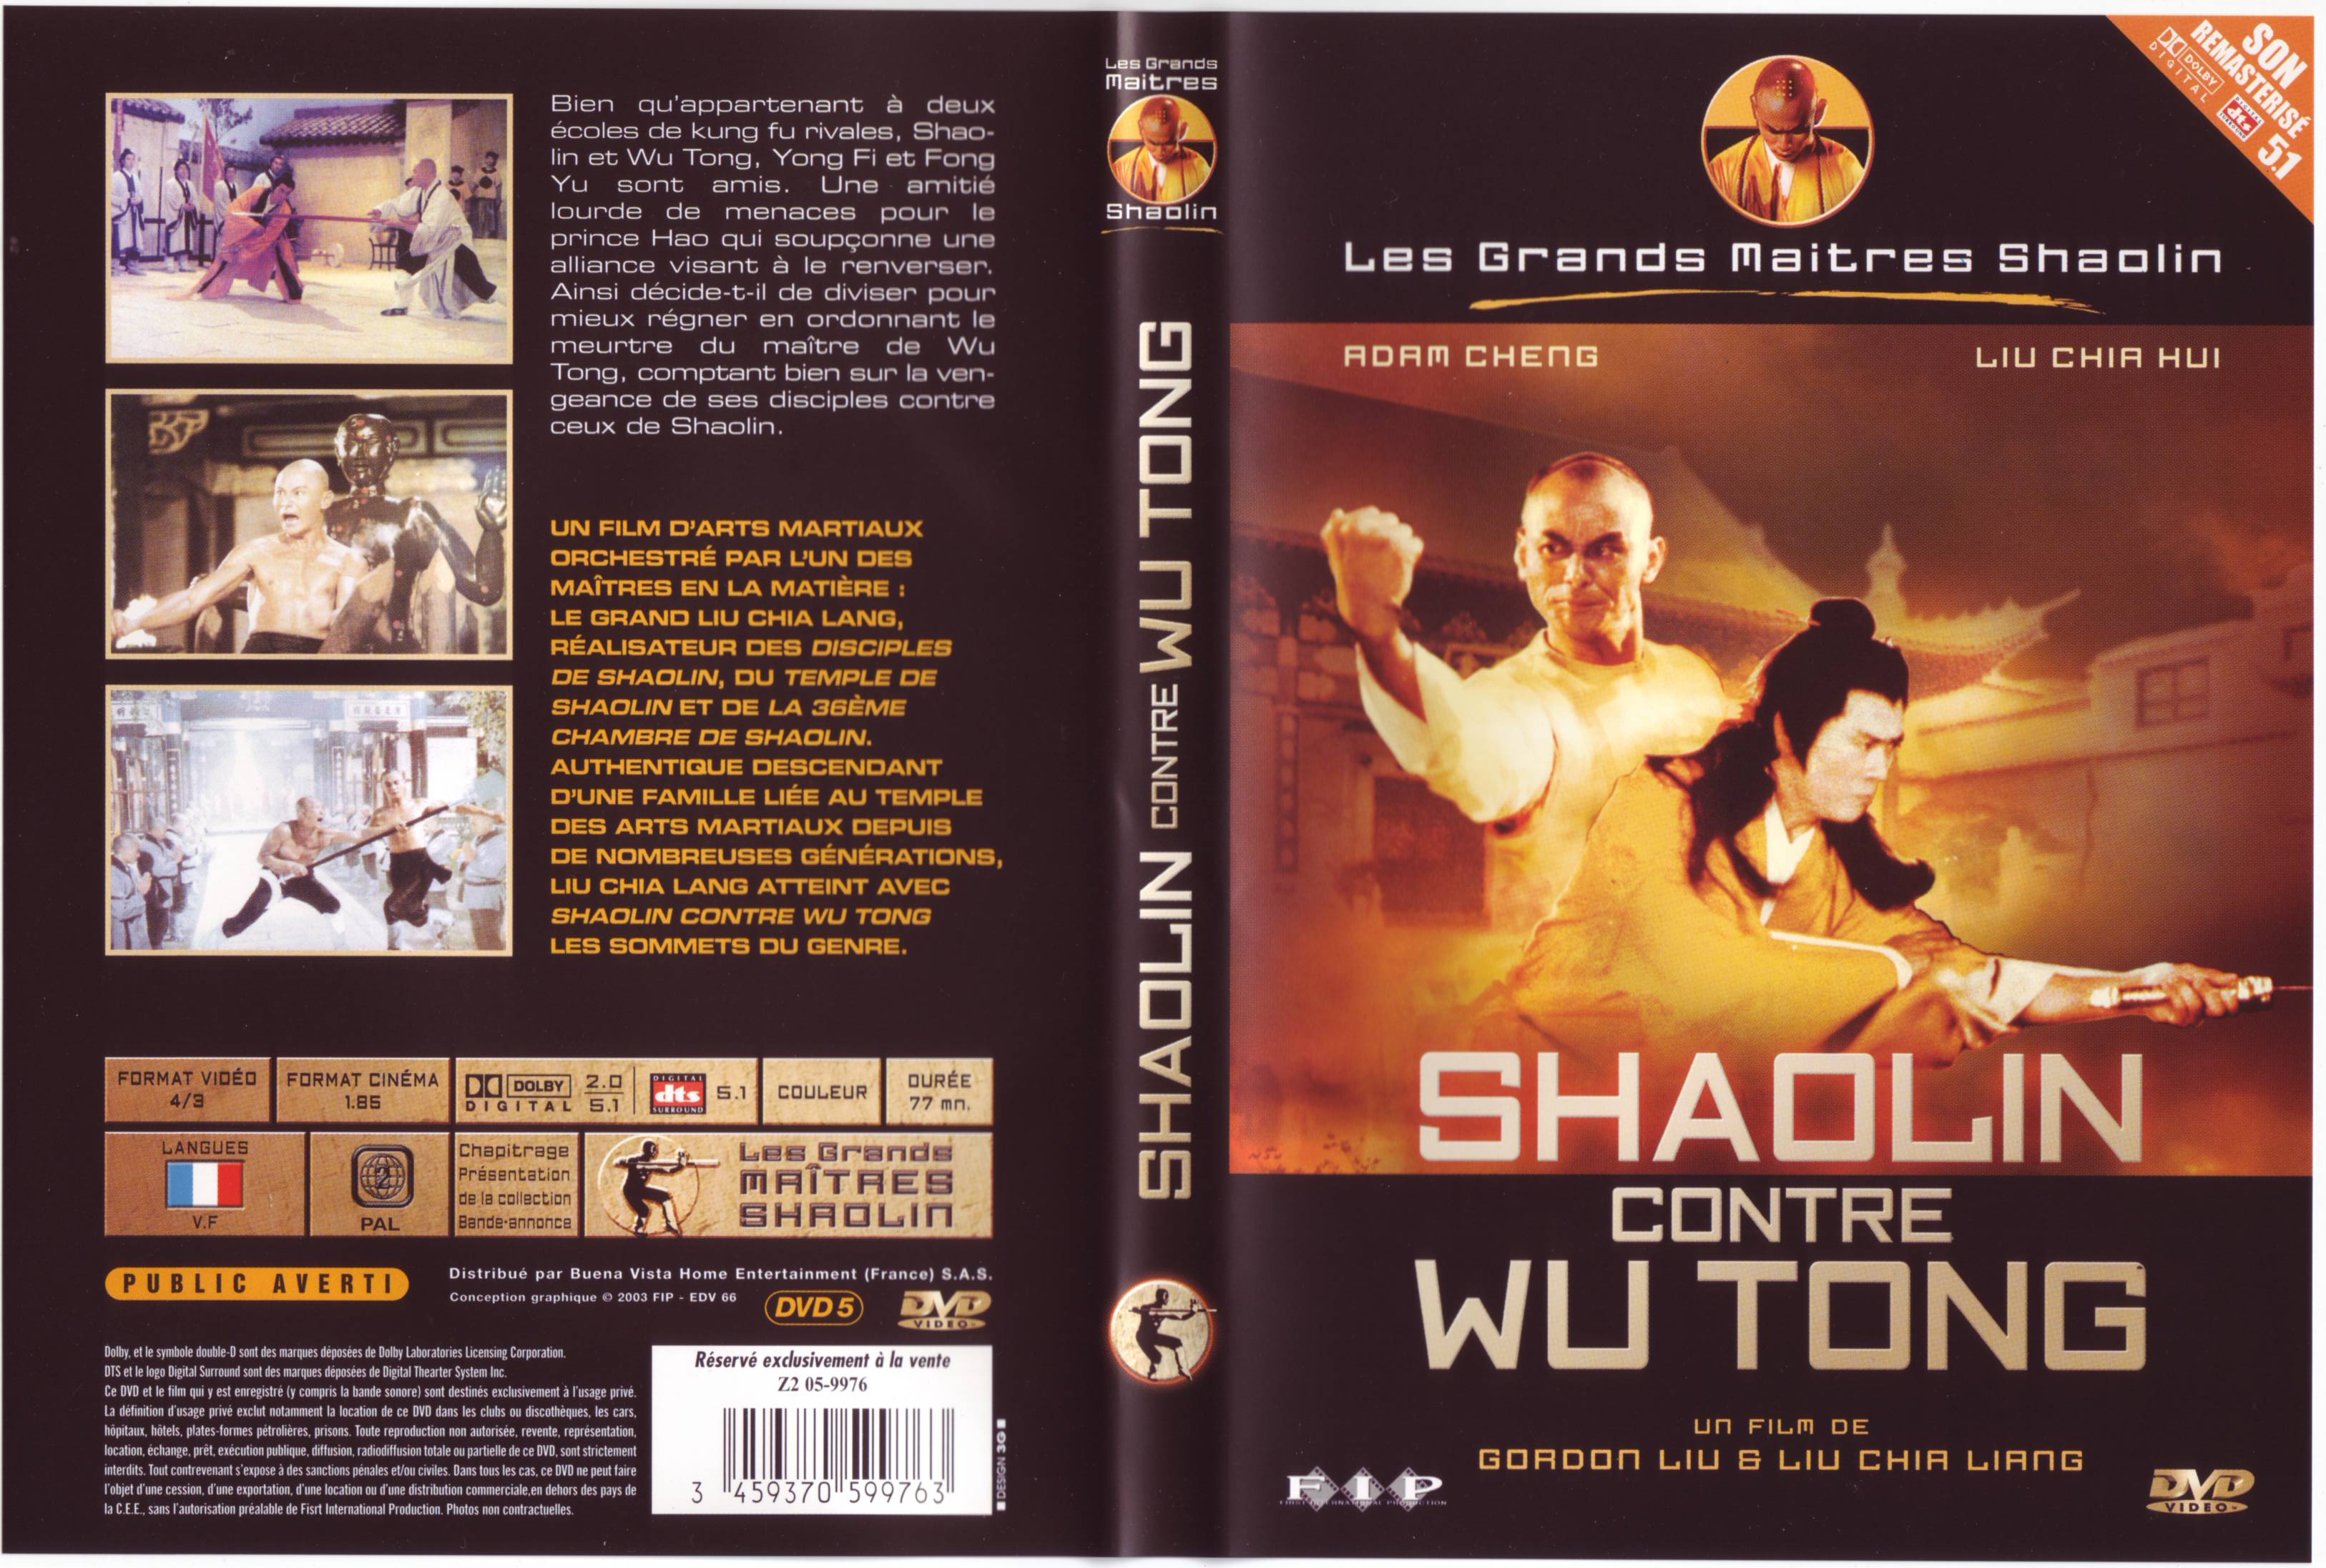 Jaquette DVD Shaolin contre Wu Tong